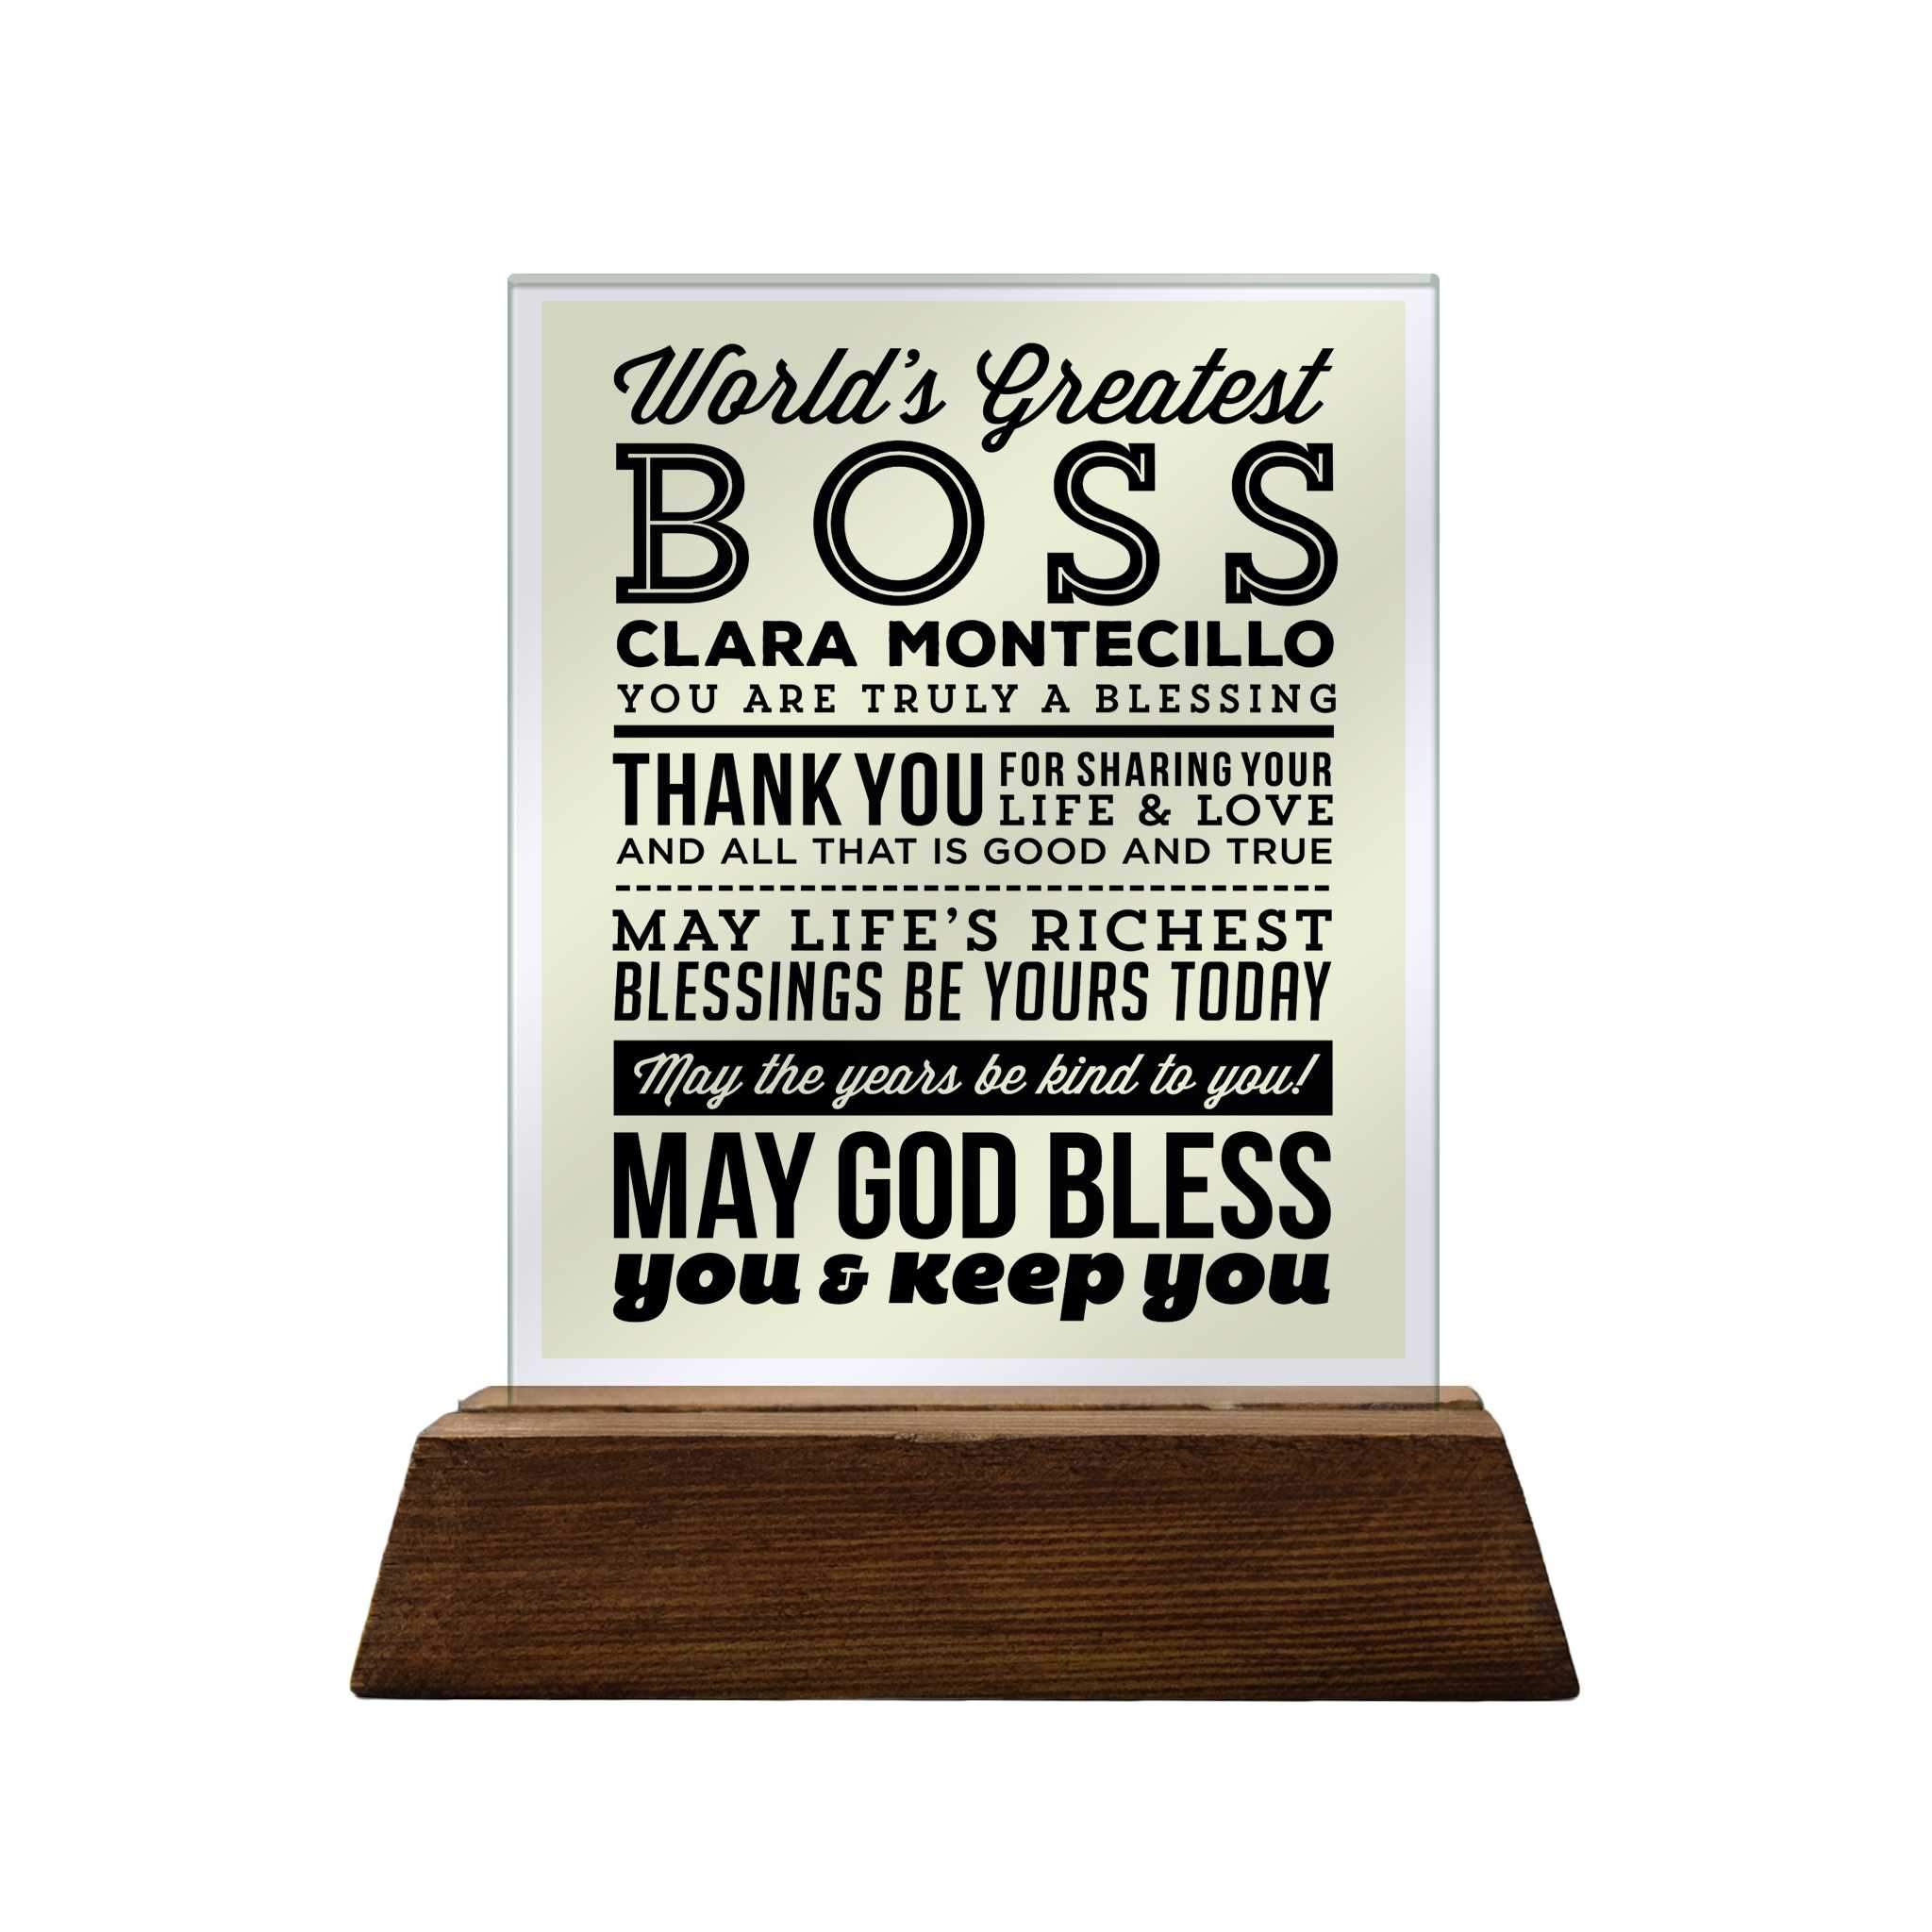 World's Greatest Boss Glass Plaque